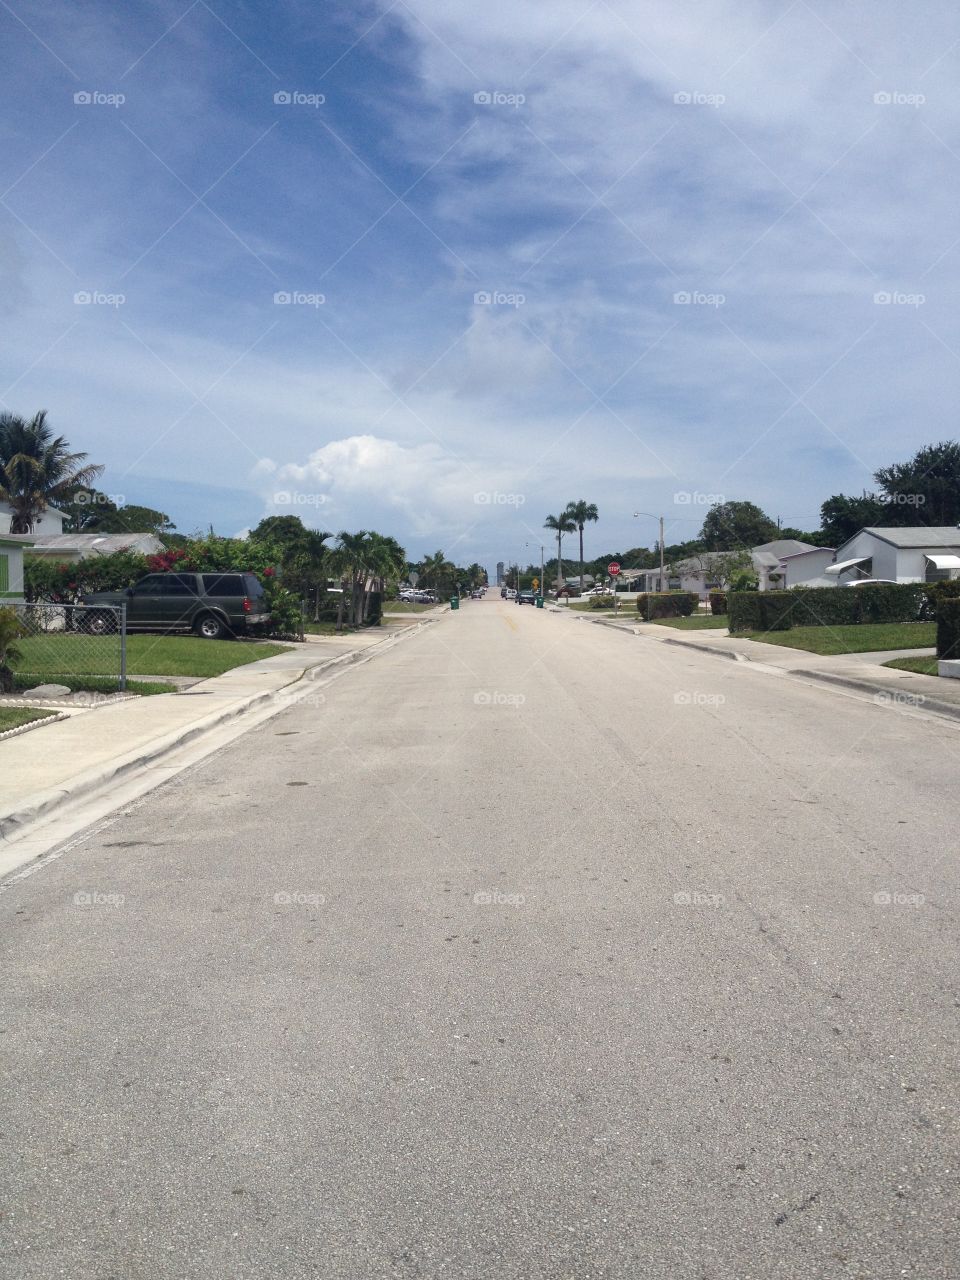 Florida life. Street in florida